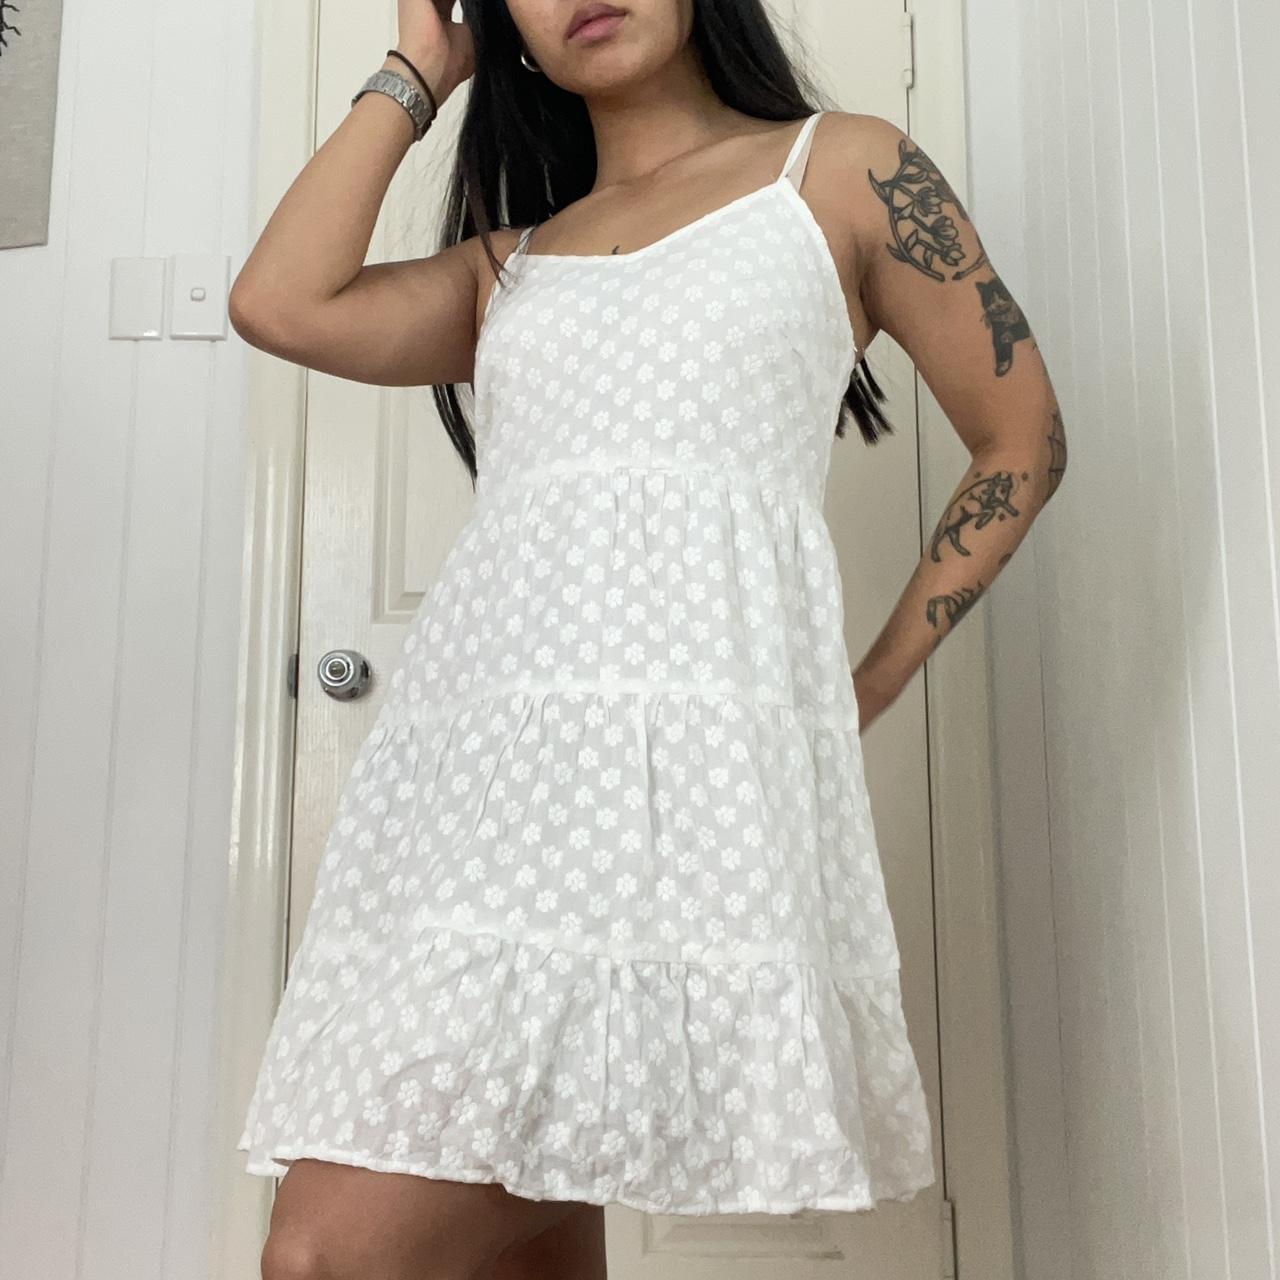 White eyelet lace summer dress Size 6 Fully lined... - Depop